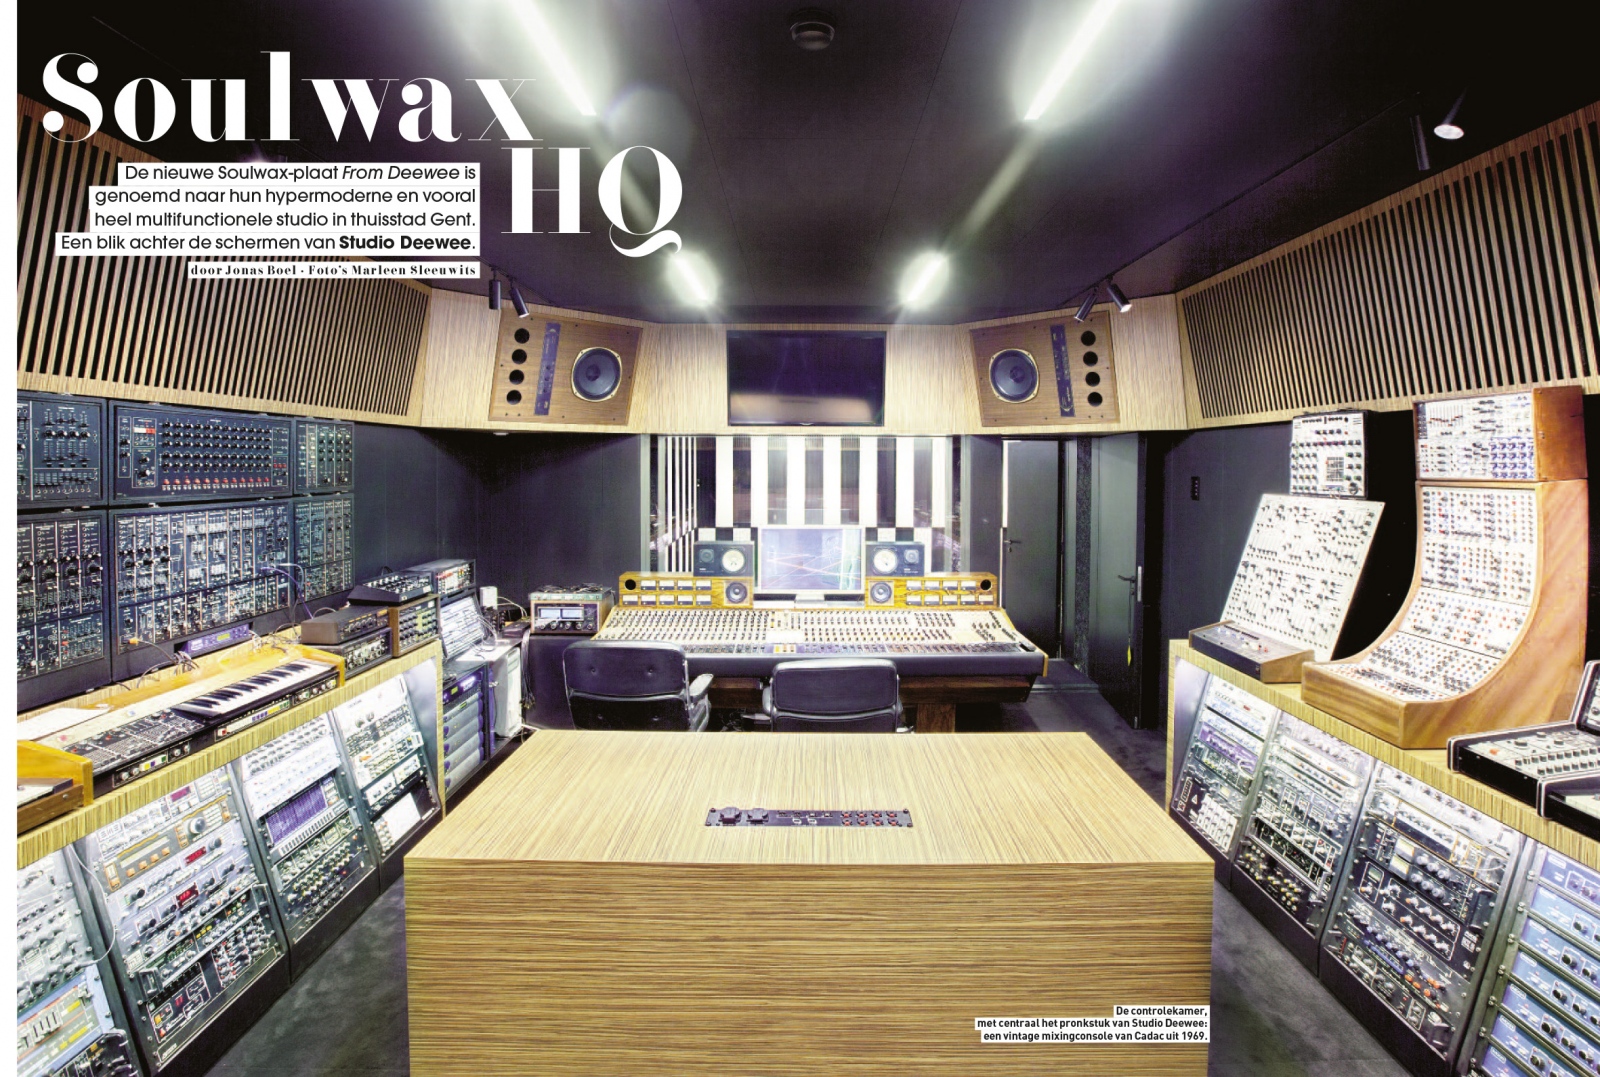 Knack Focus & Wallpaper* Magazine - Soulwax Studio